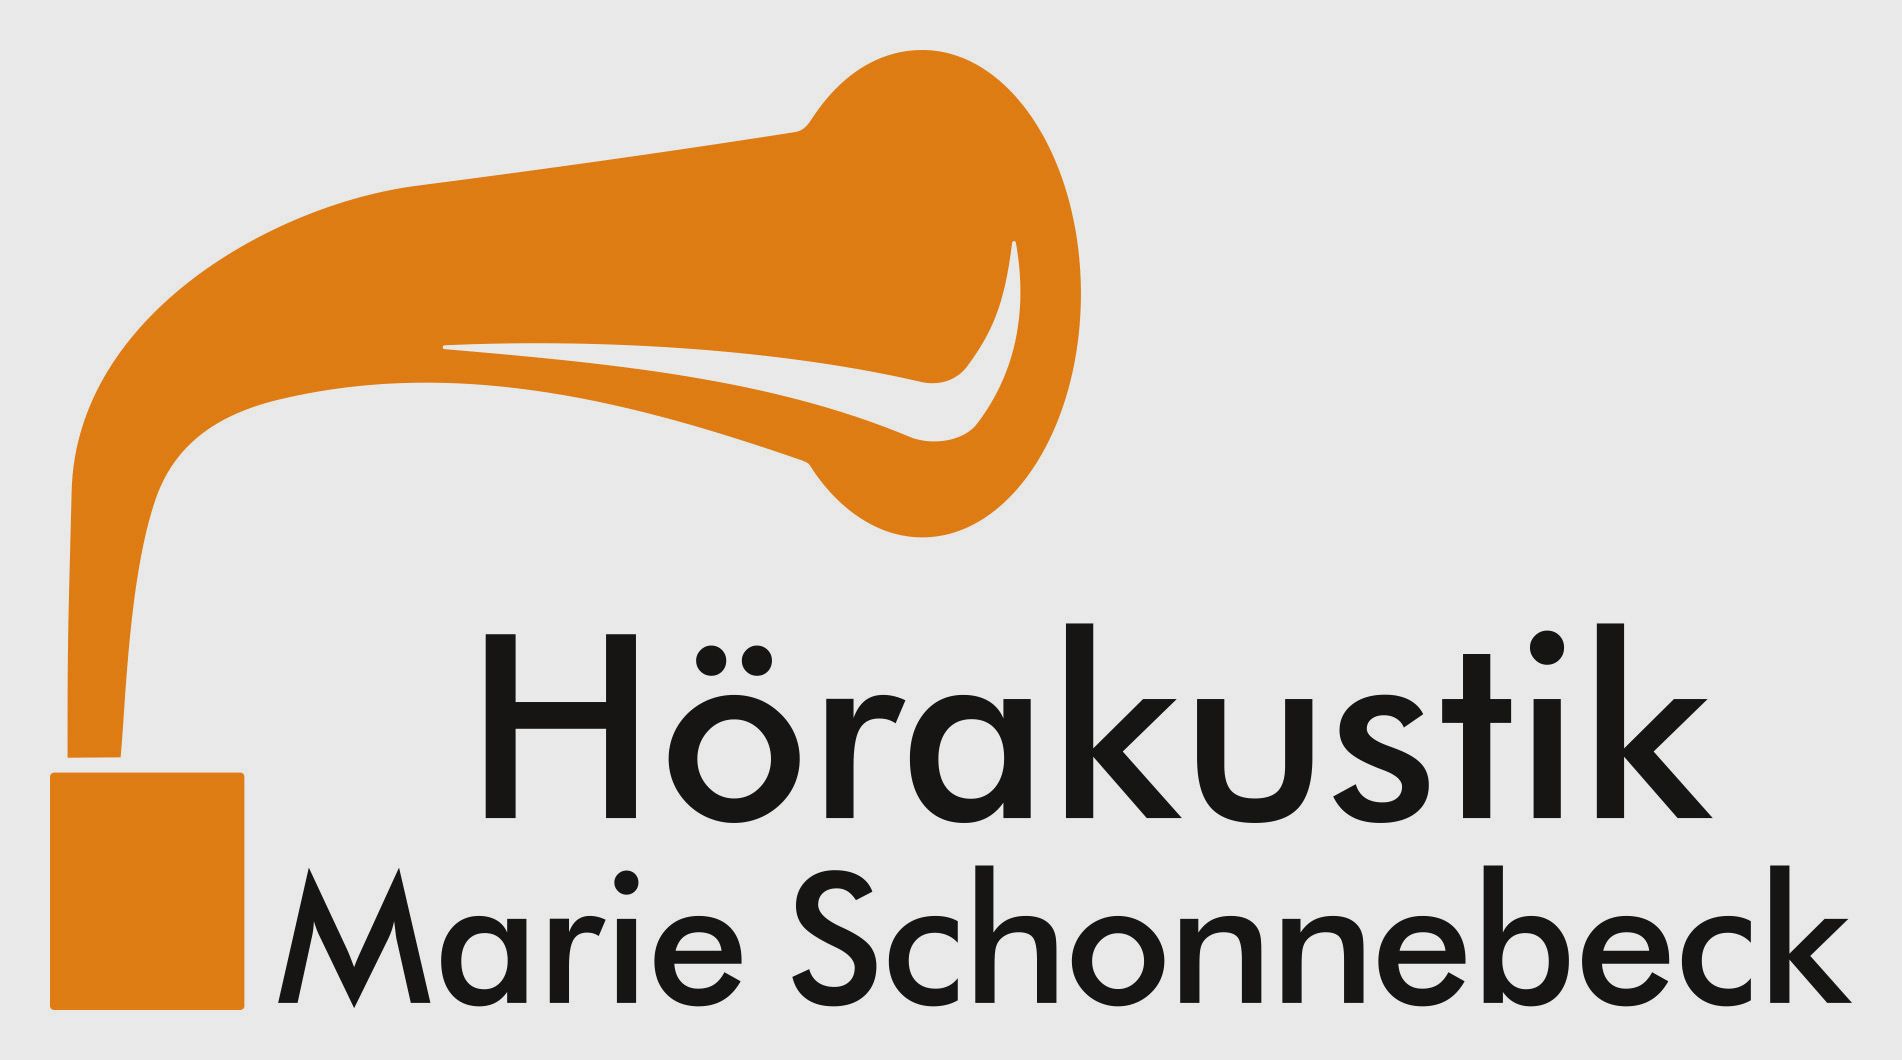 Hörakustik Marie Schonnebeck